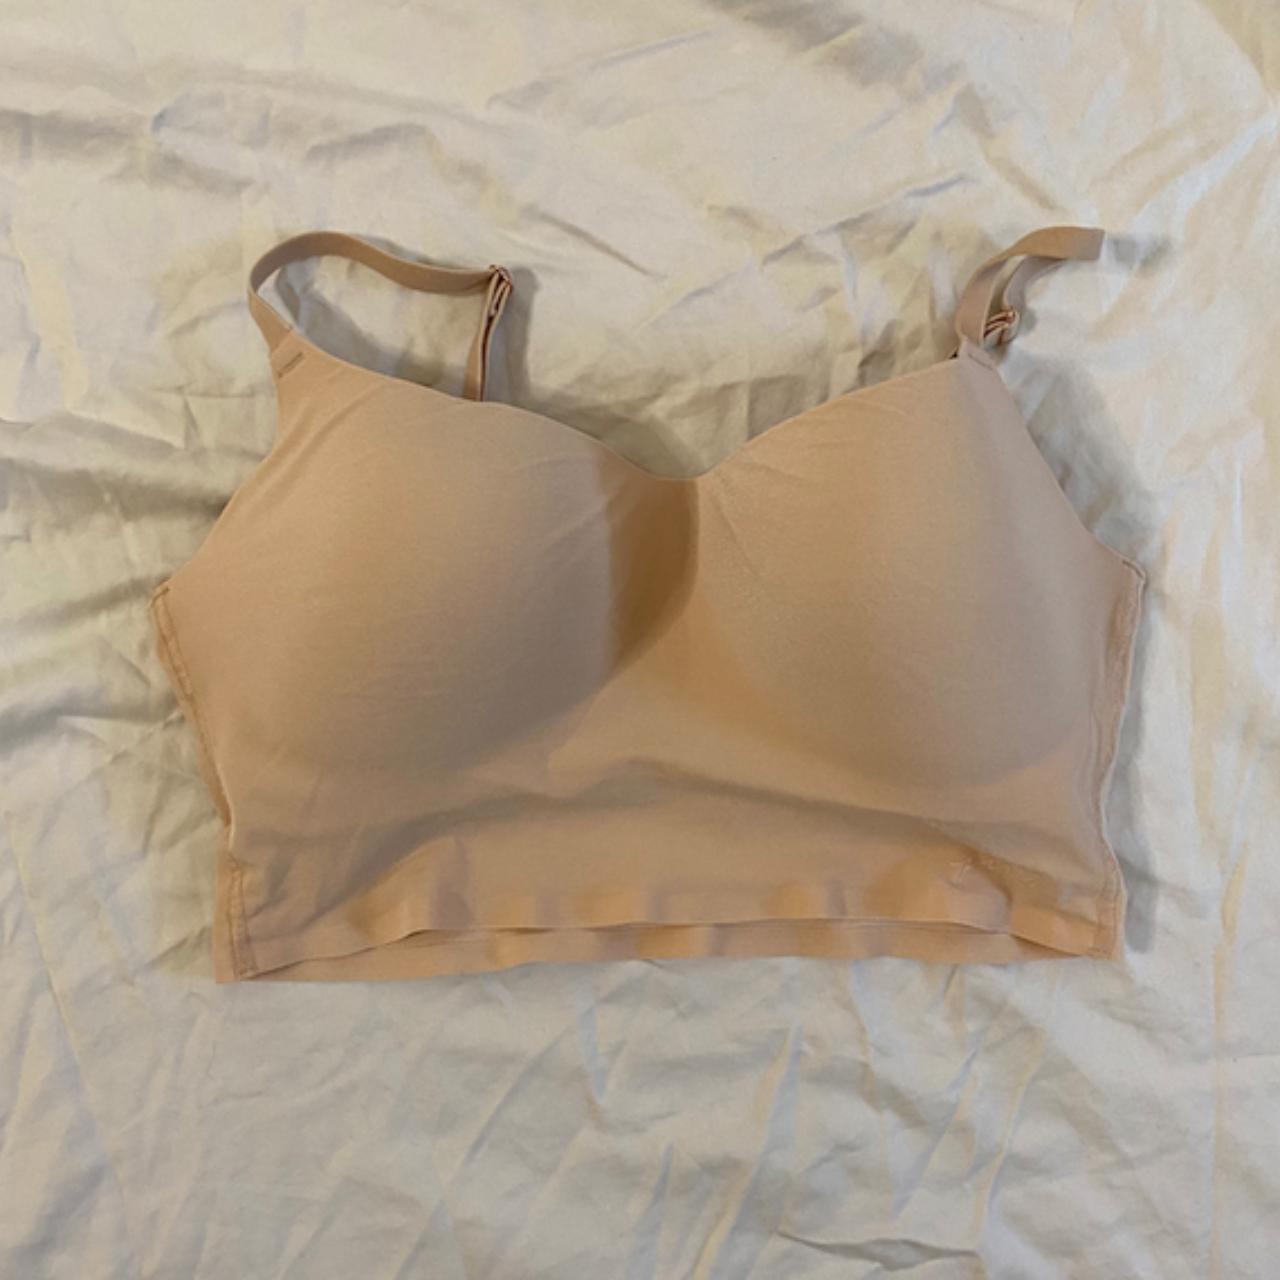 Soft victoria's secret nude wireless bra size - Depop